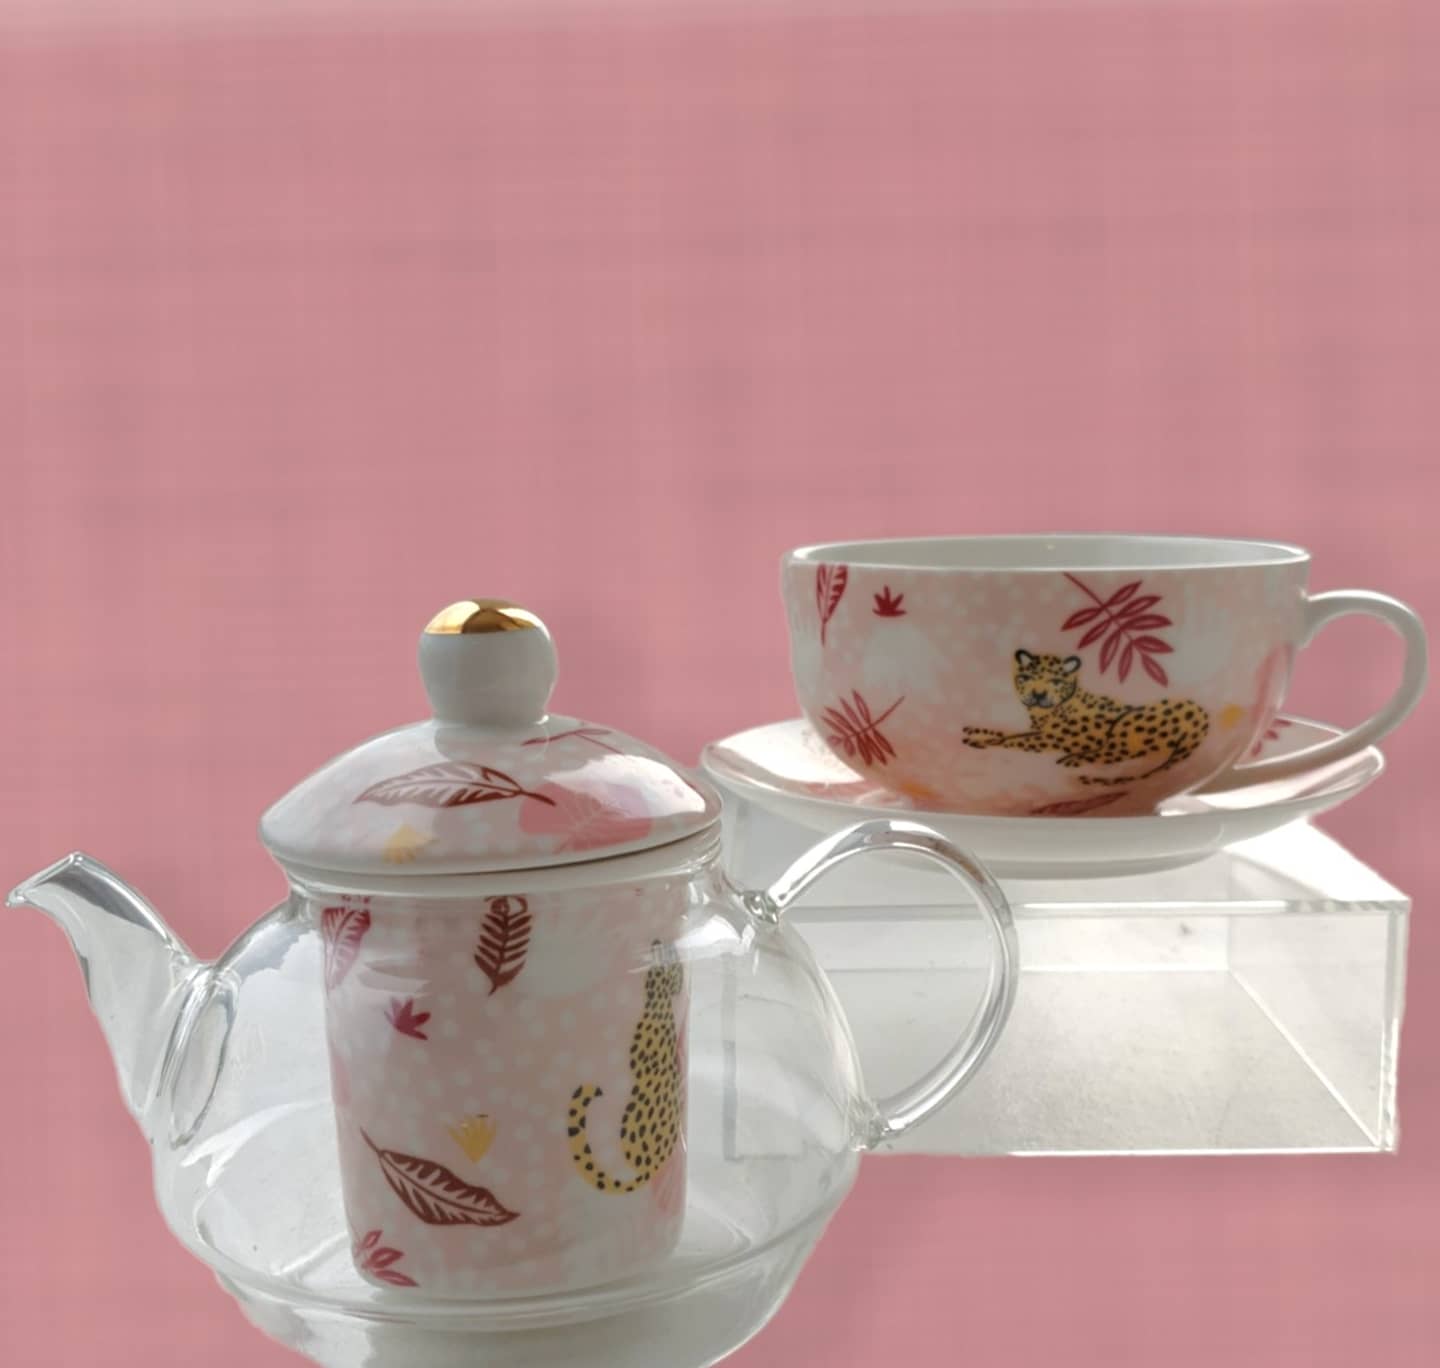 VIA Teapot set for 1